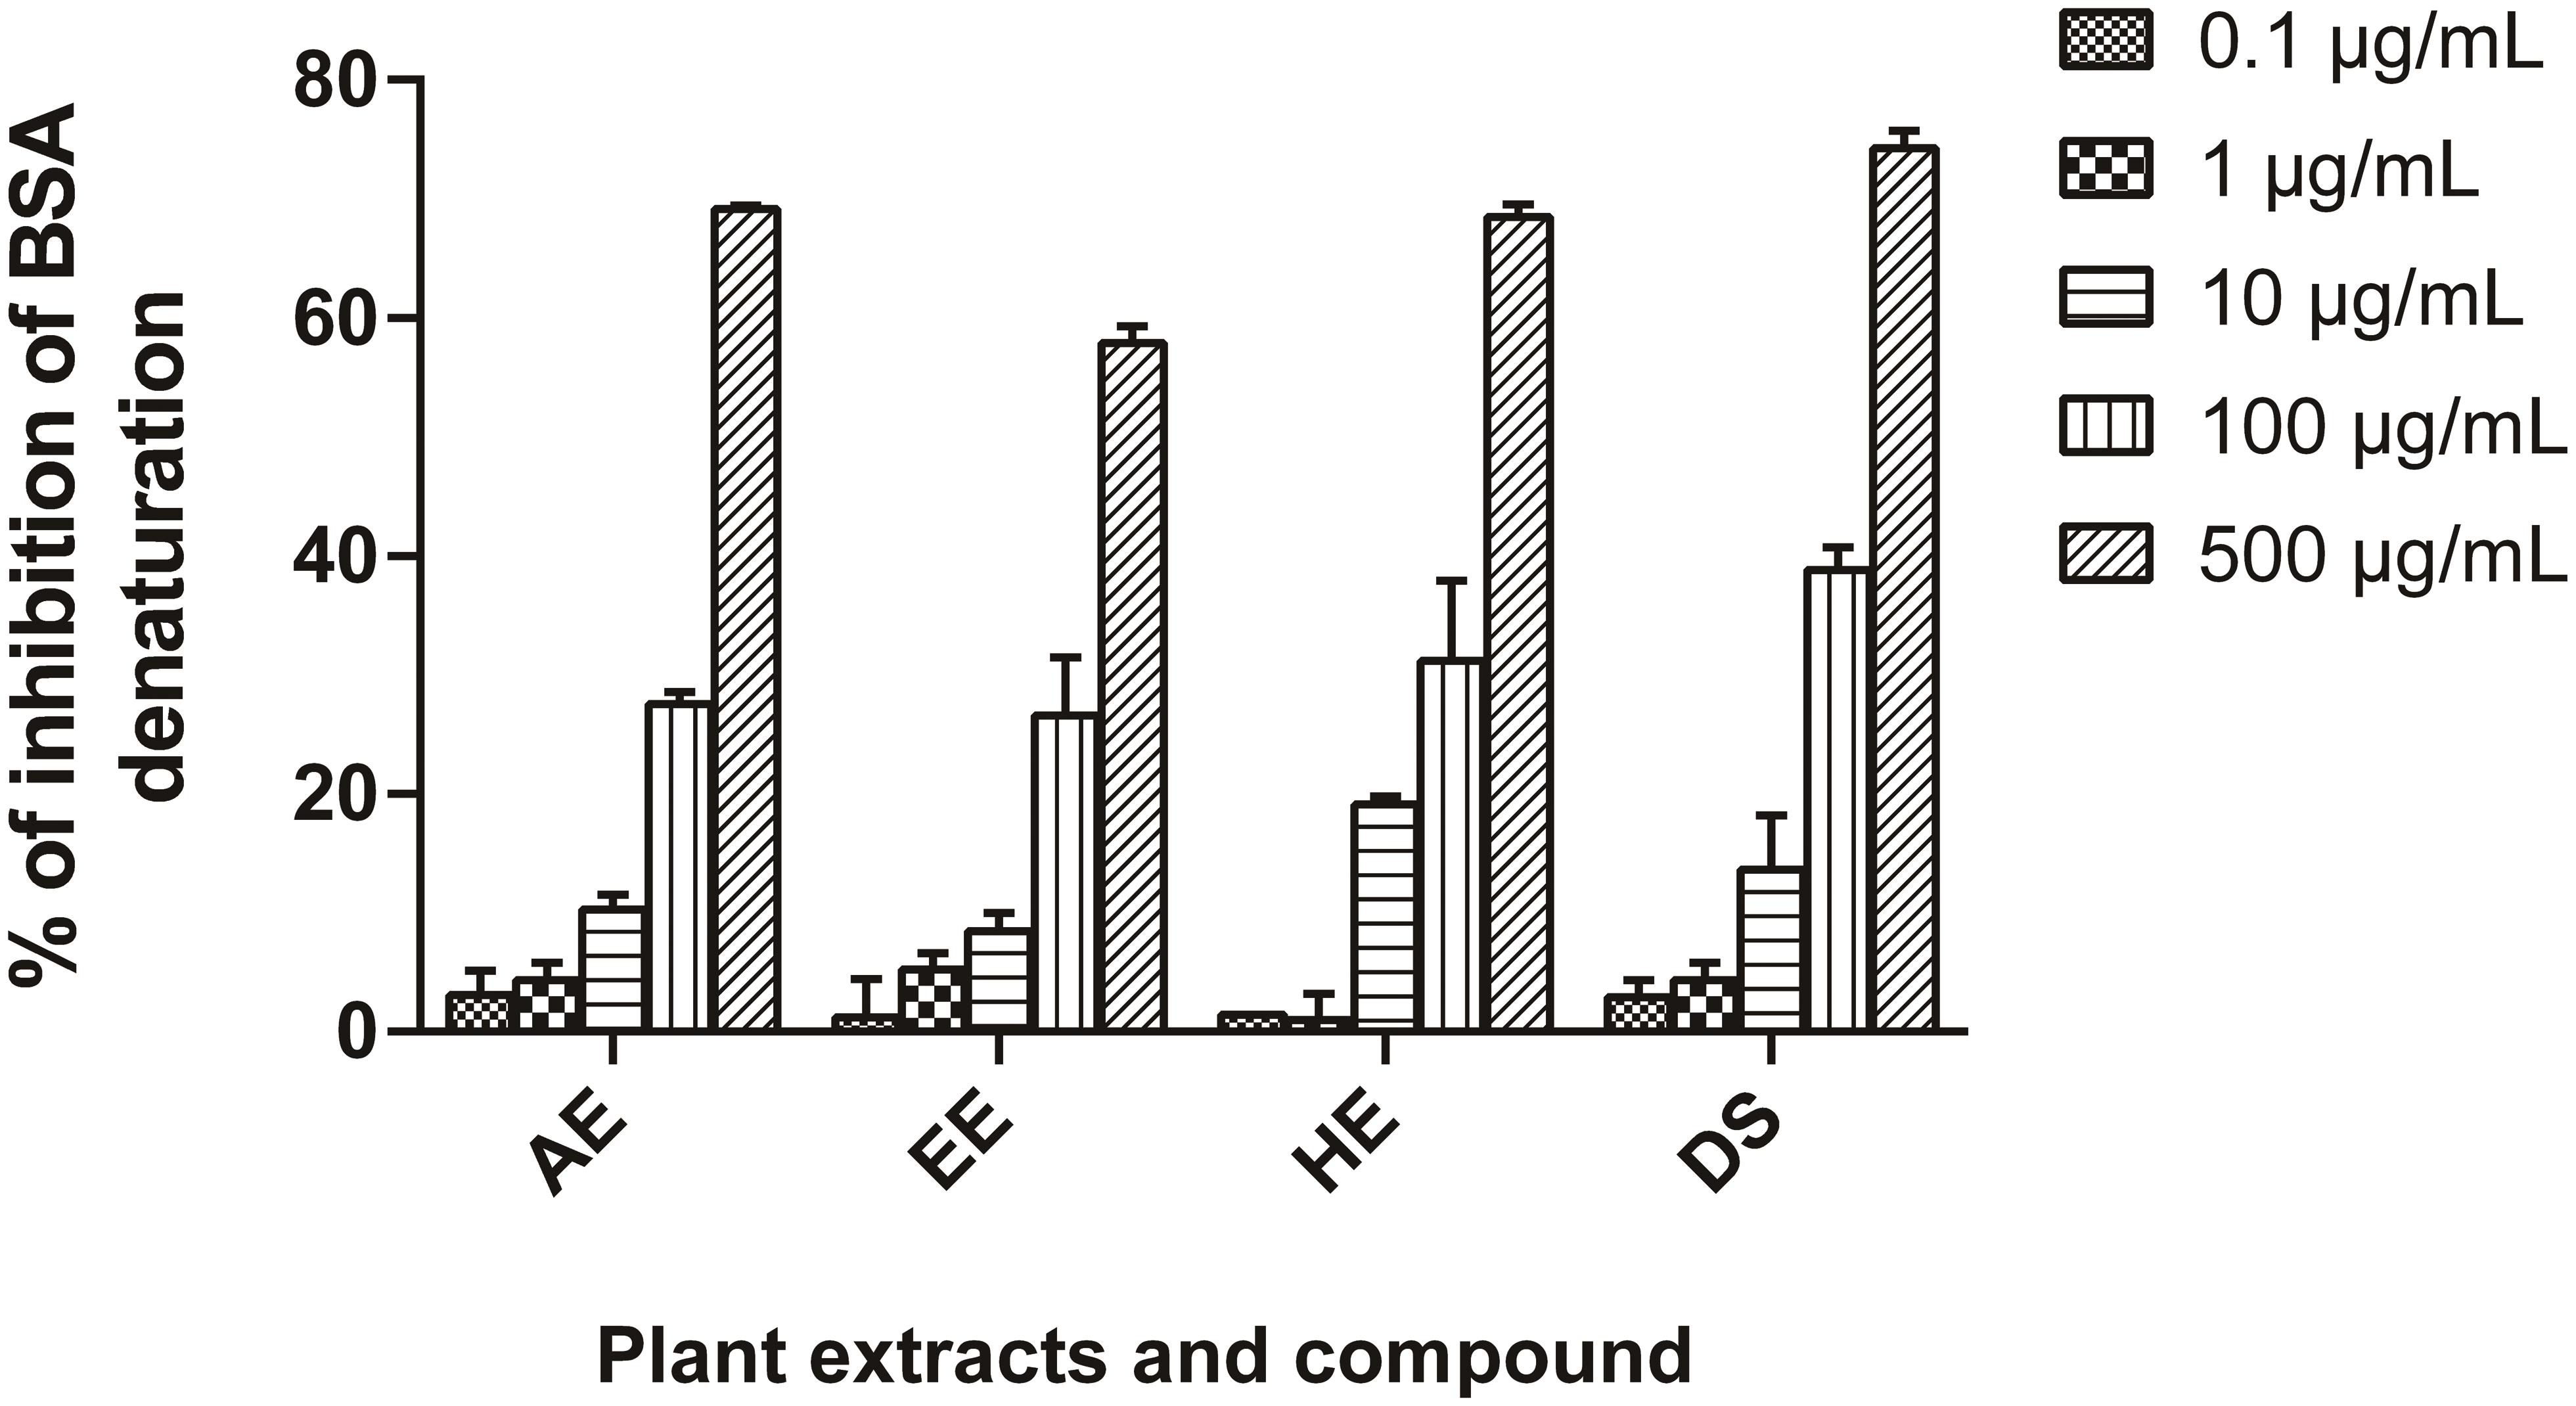 Anti-inflammatory activity of <italic>Codiaeum variegatum</italic> stem extracts: Effect on BSA denaturation.